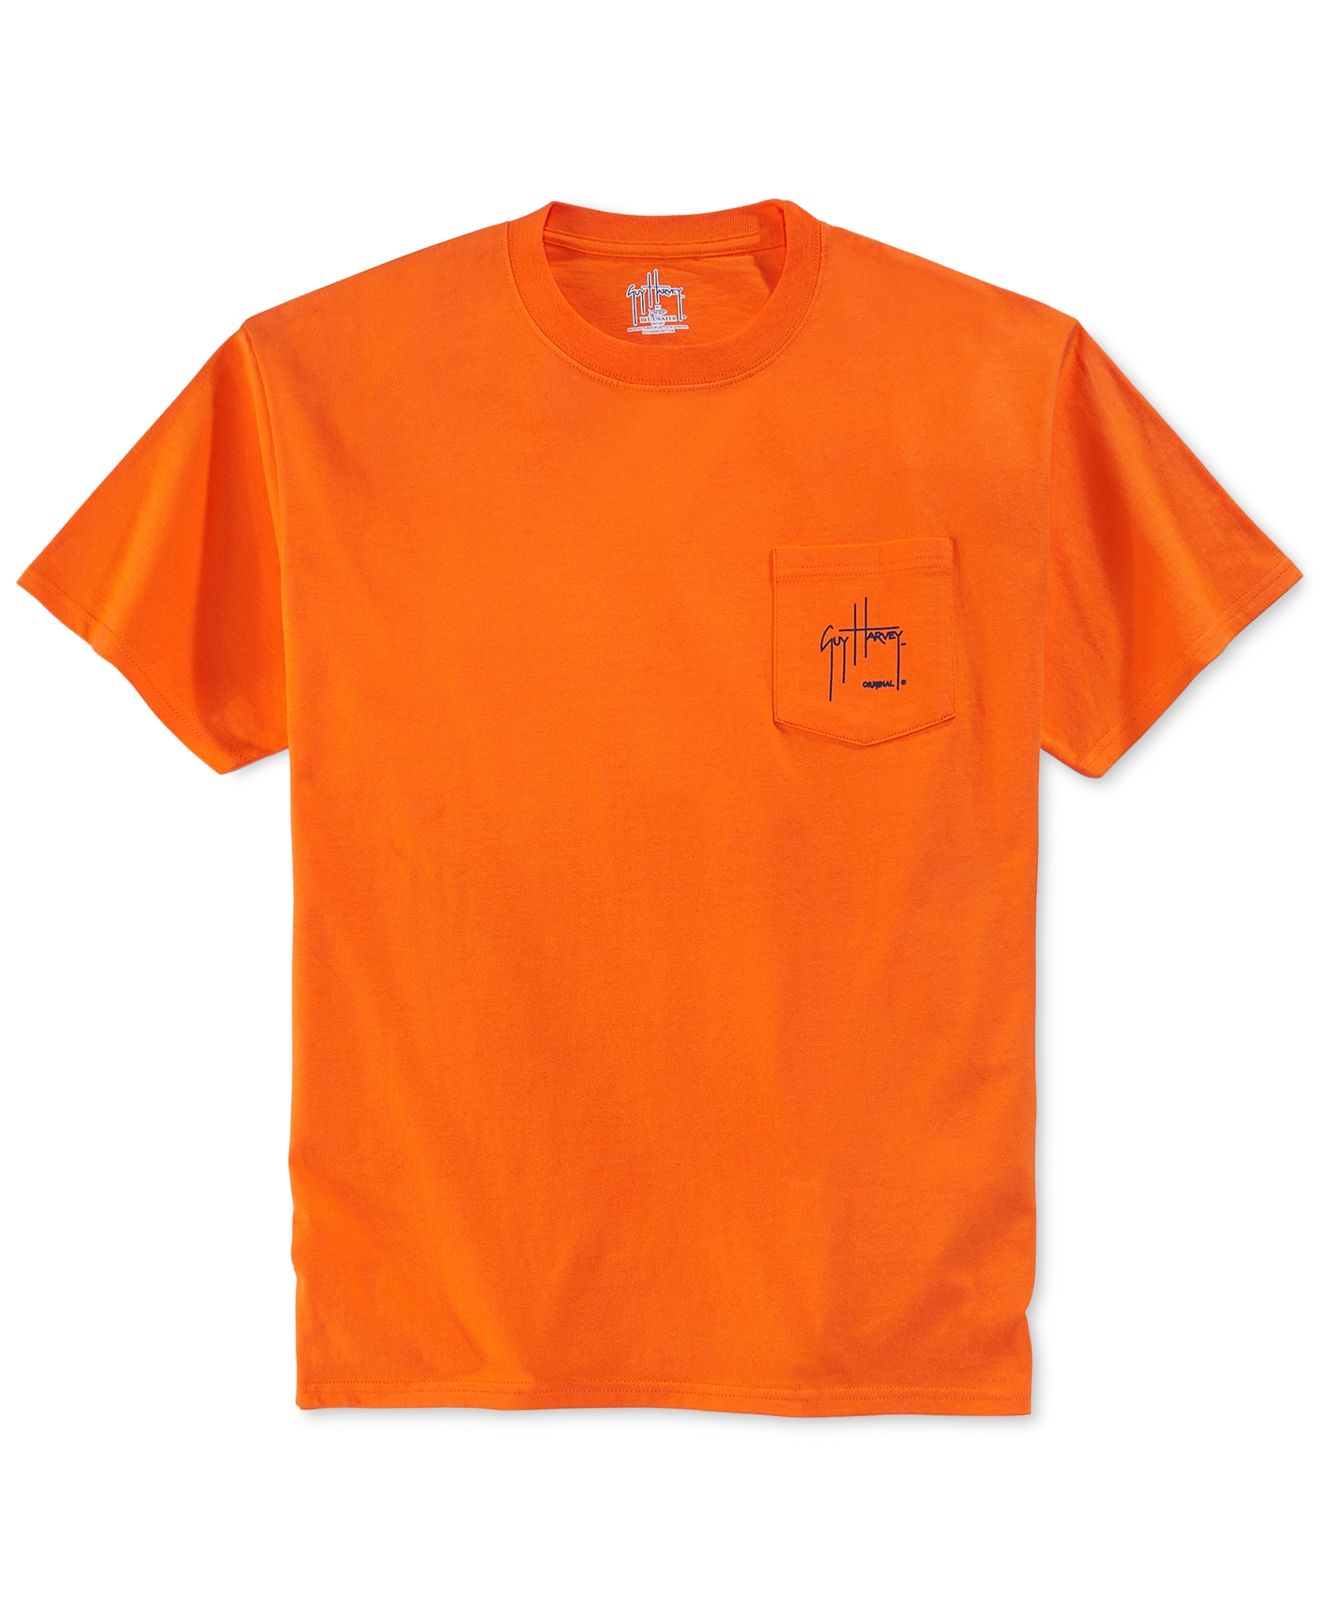 Lyst - Guy Harvey Halo Pocket T-shirt in Orange for Men